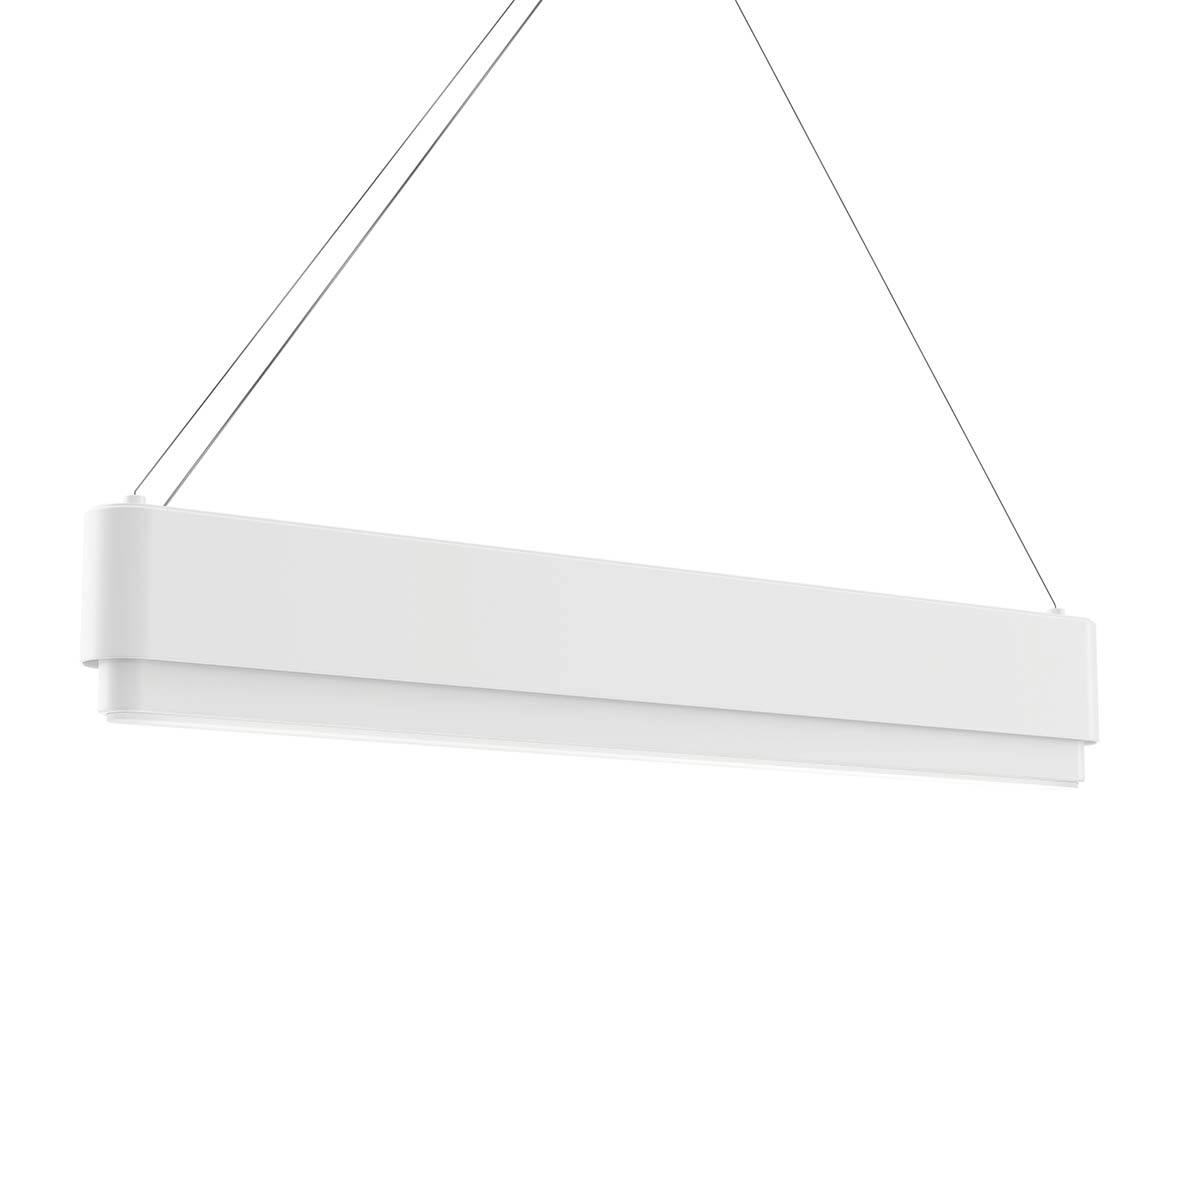 Walman 35.5" LED Linear Pendant White on a white background